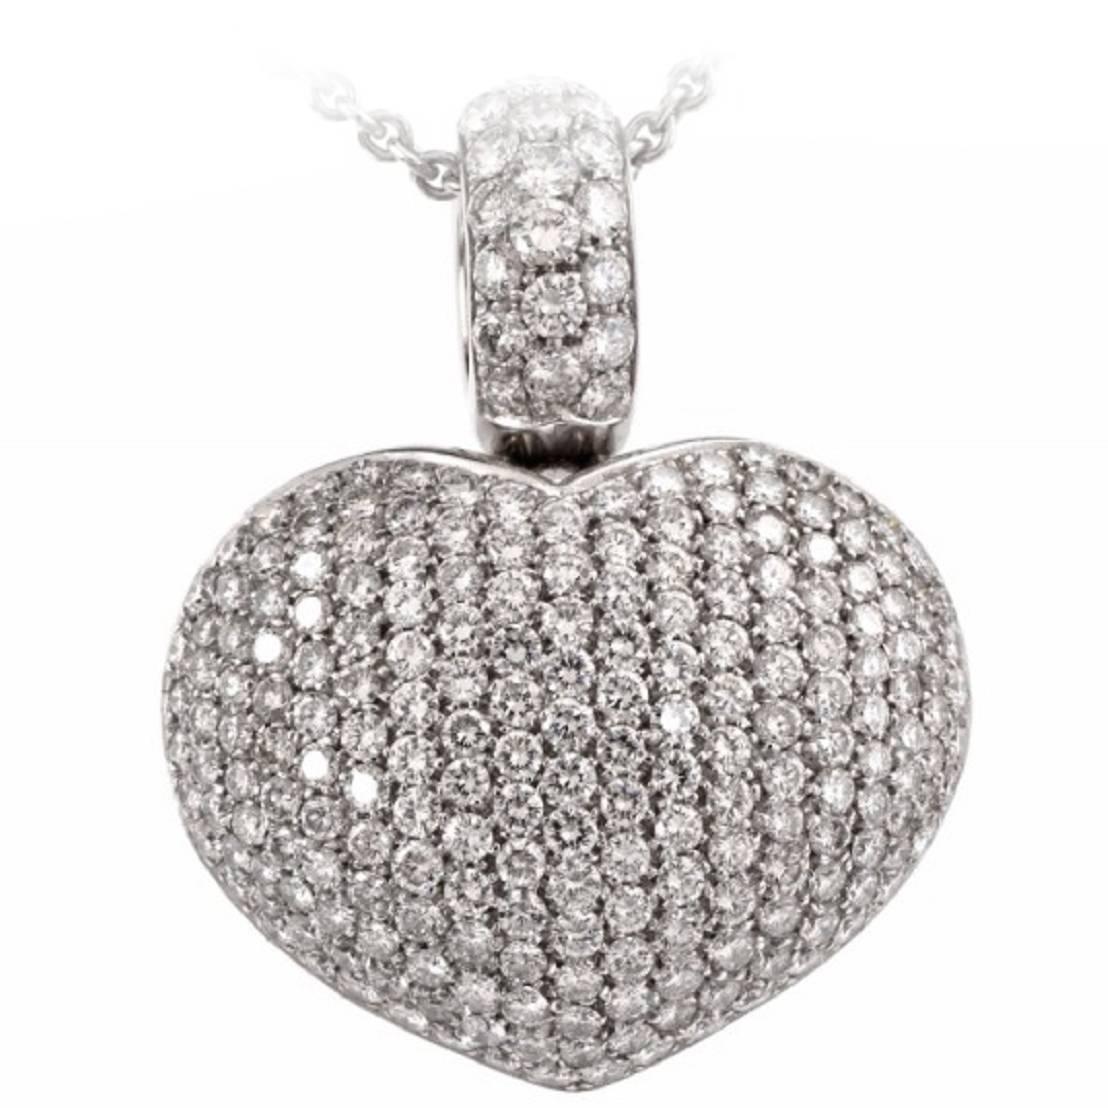  Pasquale Bruni Large Diamond Gold Encrusted Heart Pendant 